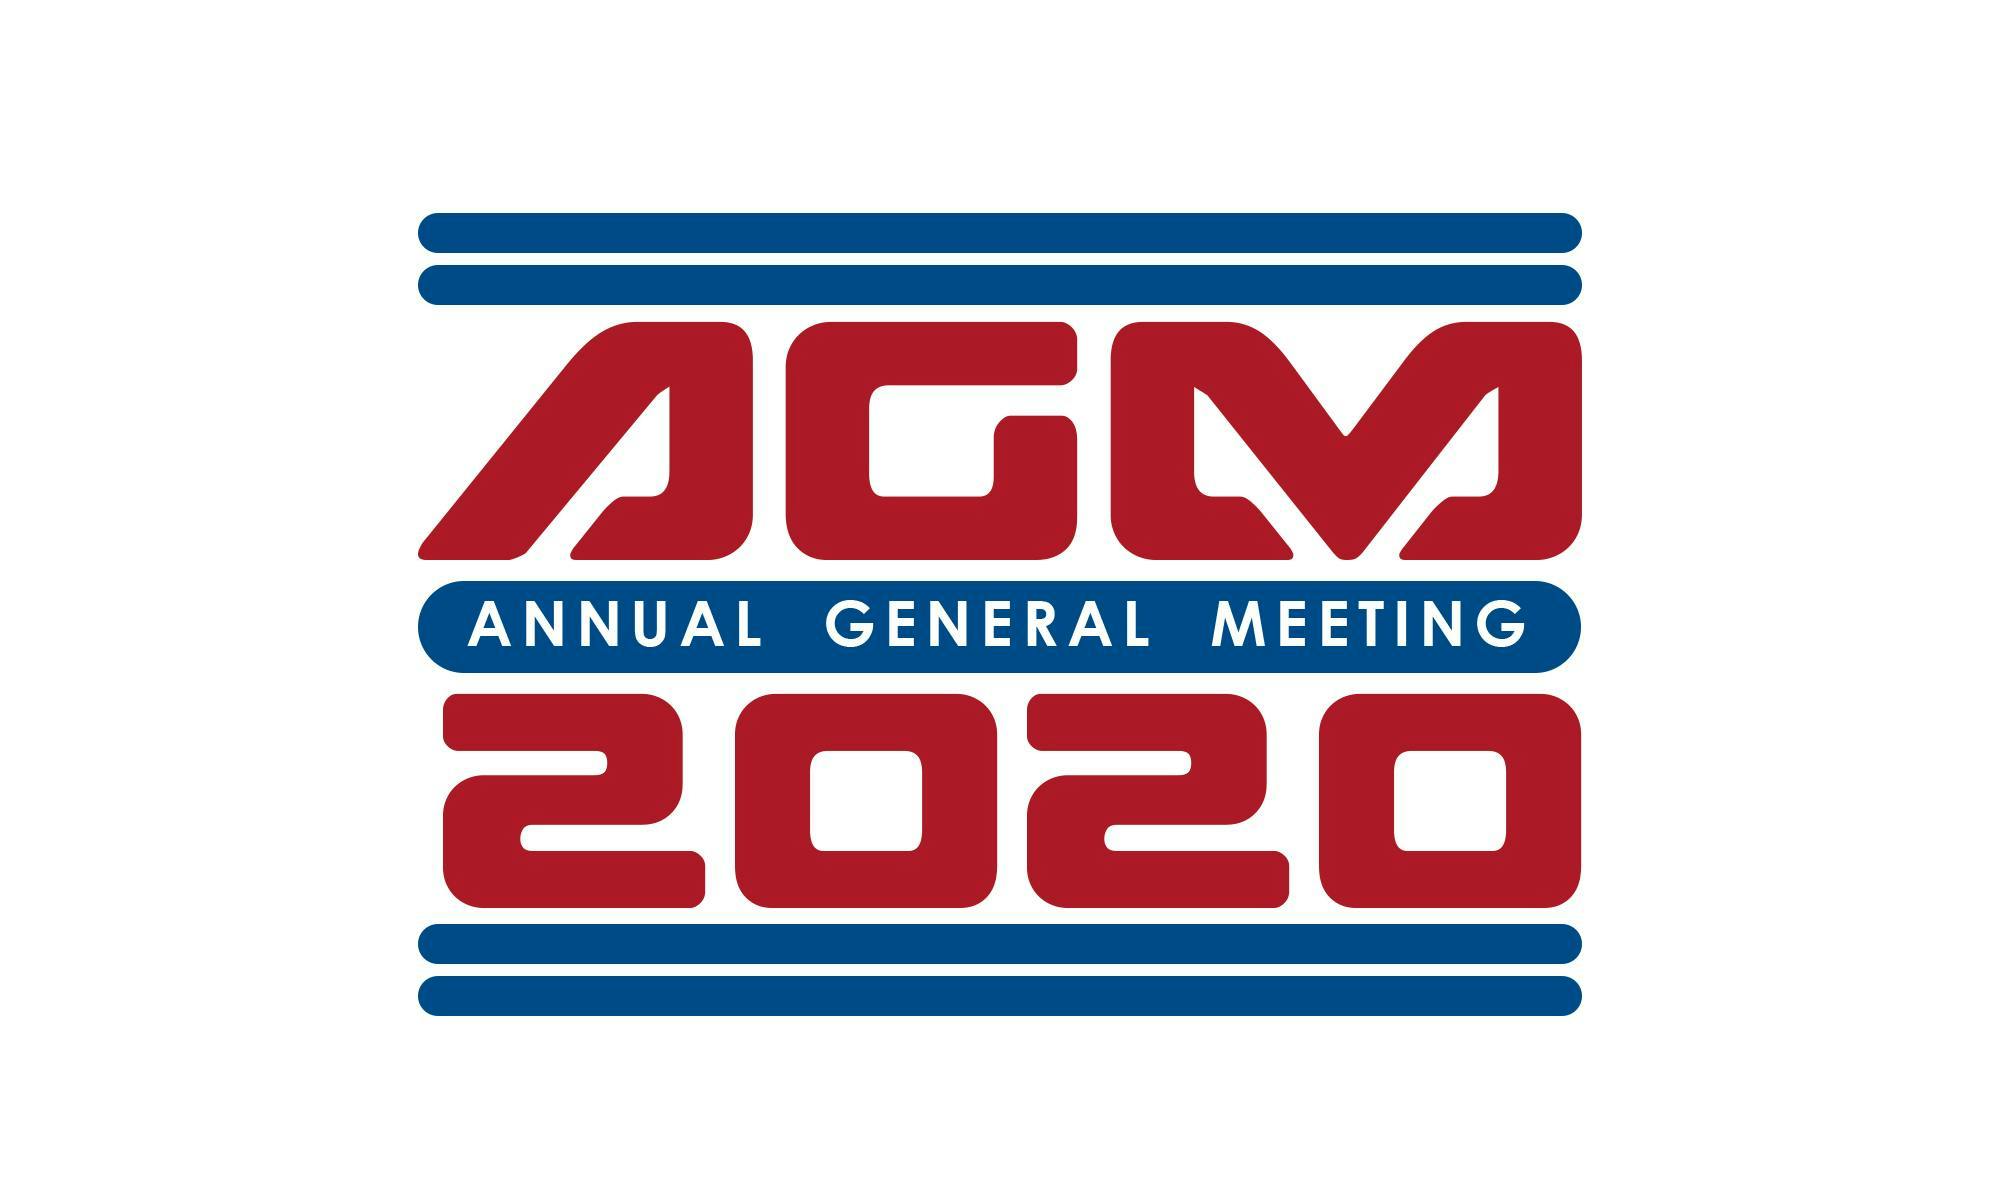 Annual General Meeting Logo